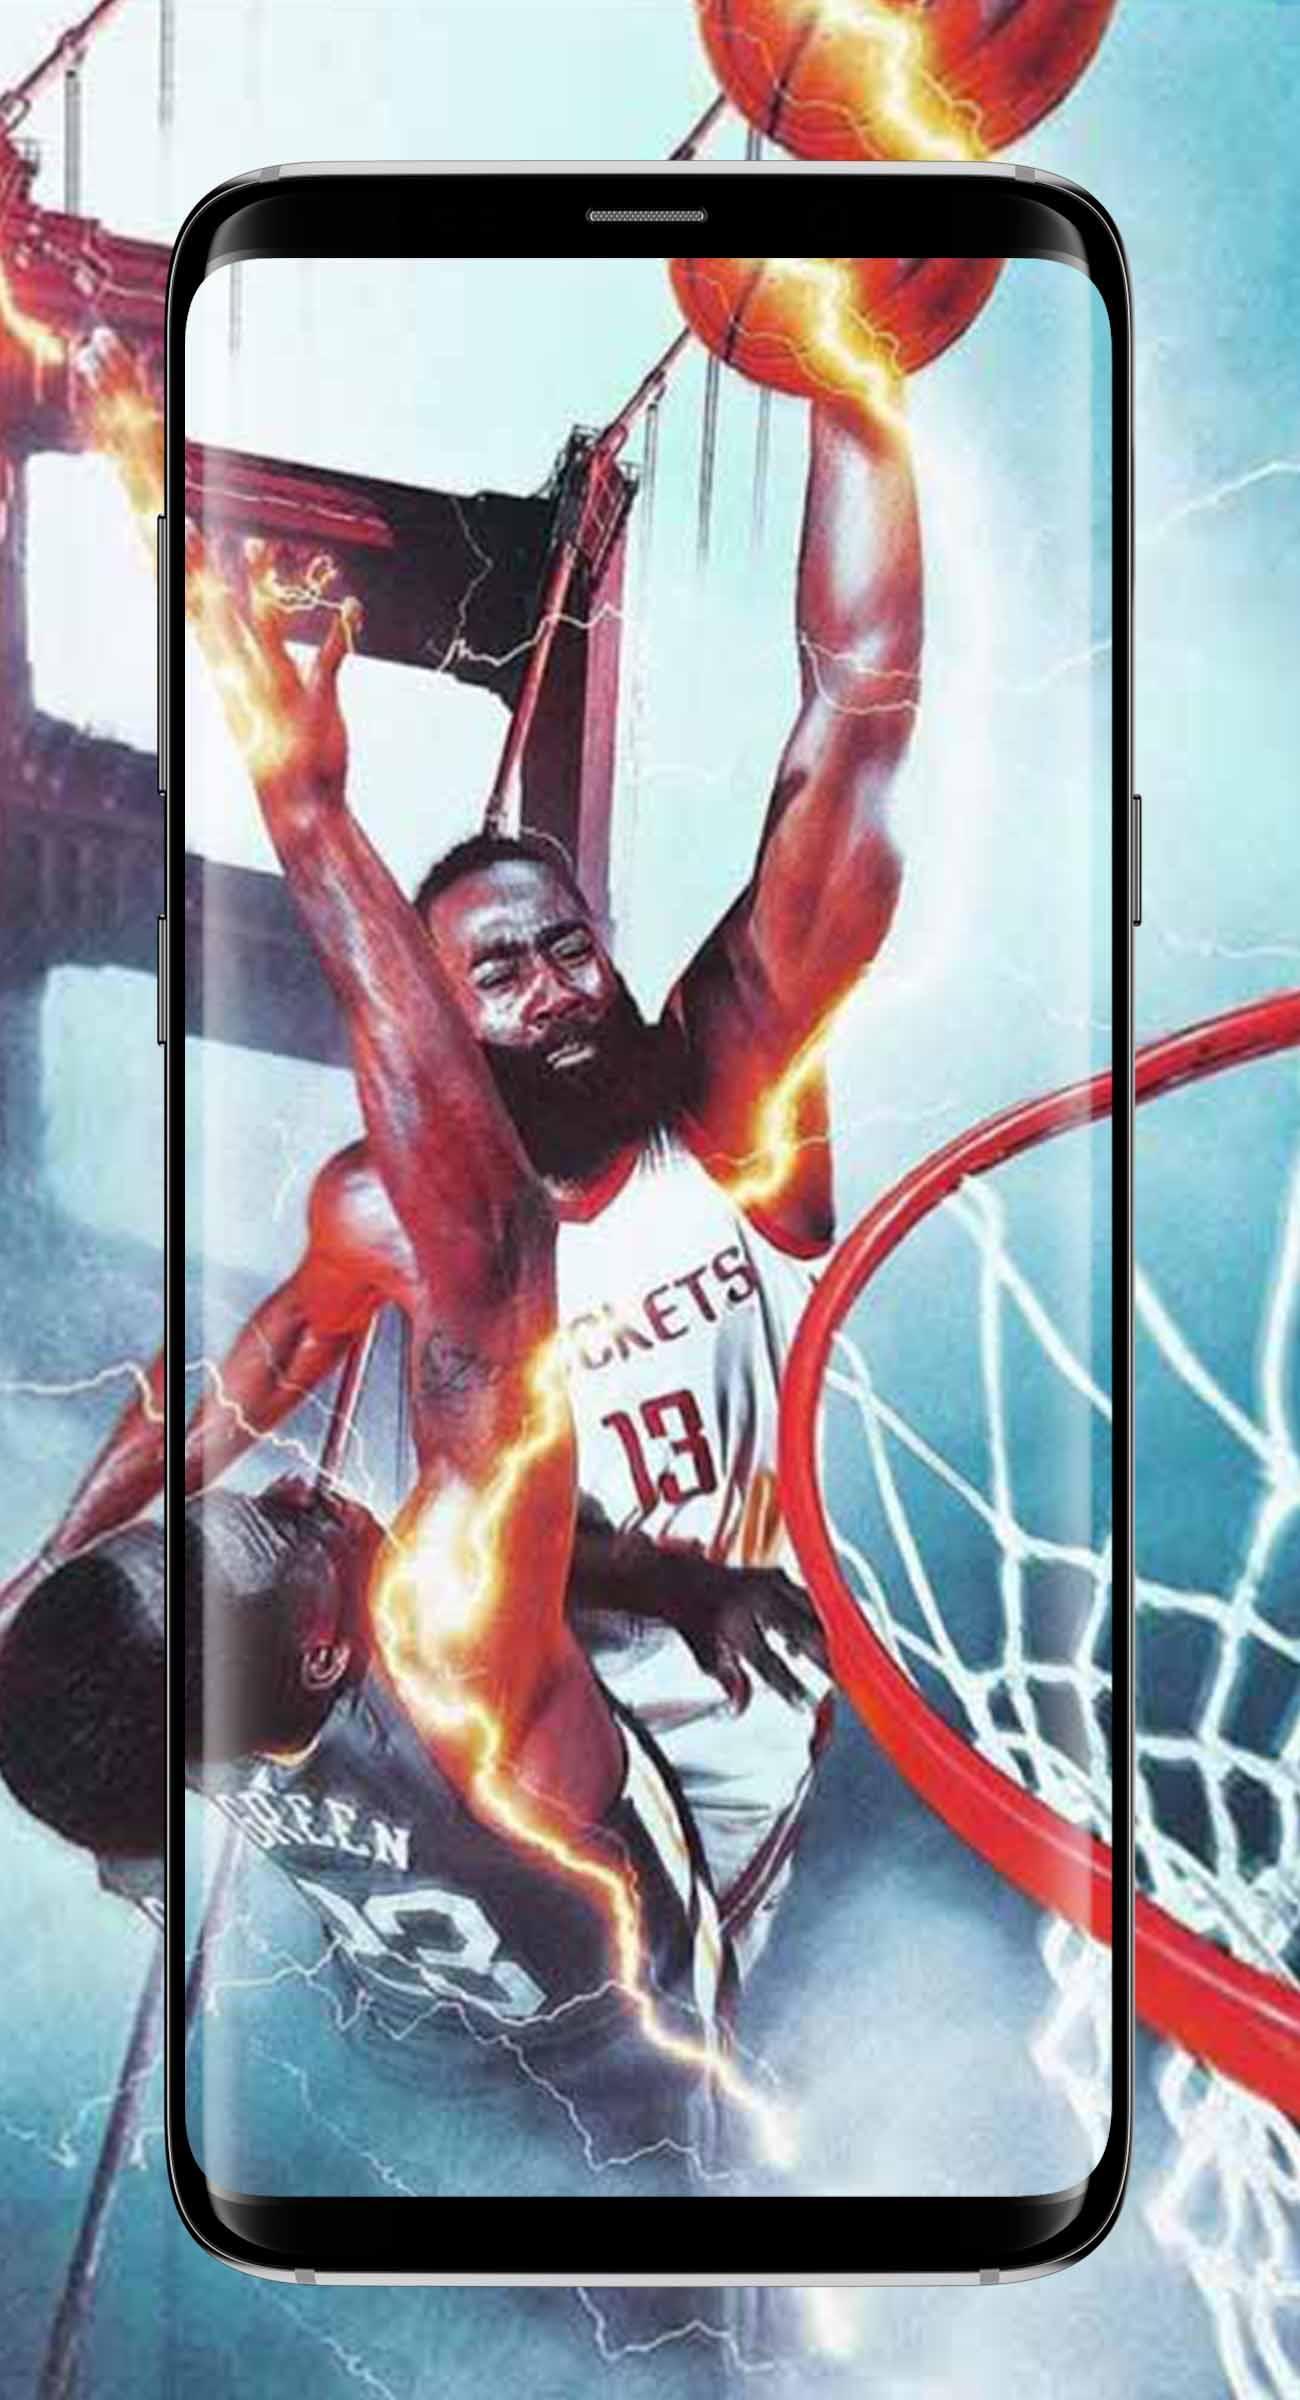 HD wallpaper: James Harden, NBA, Houston Rockets, dunks